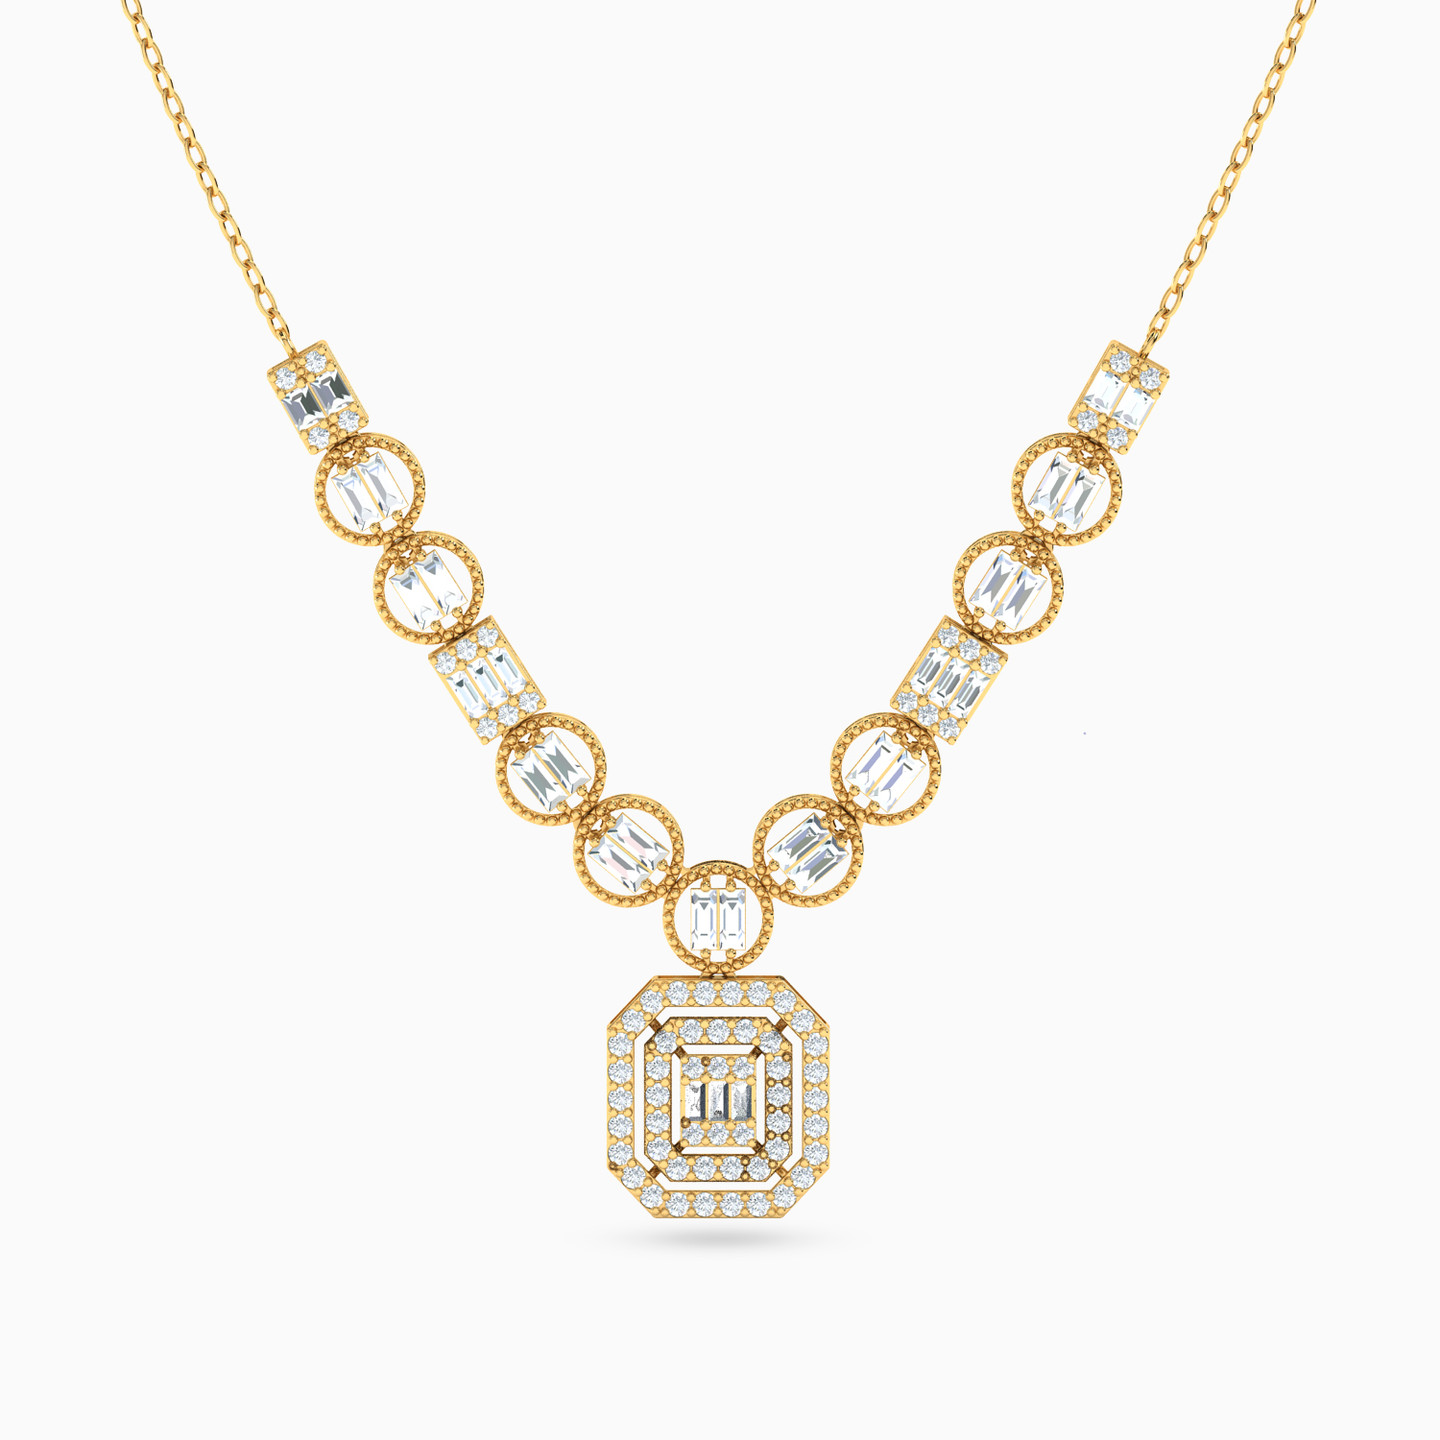 18K Gold Cubic Zirconia Jewelry Set - 4 Pieces - 5